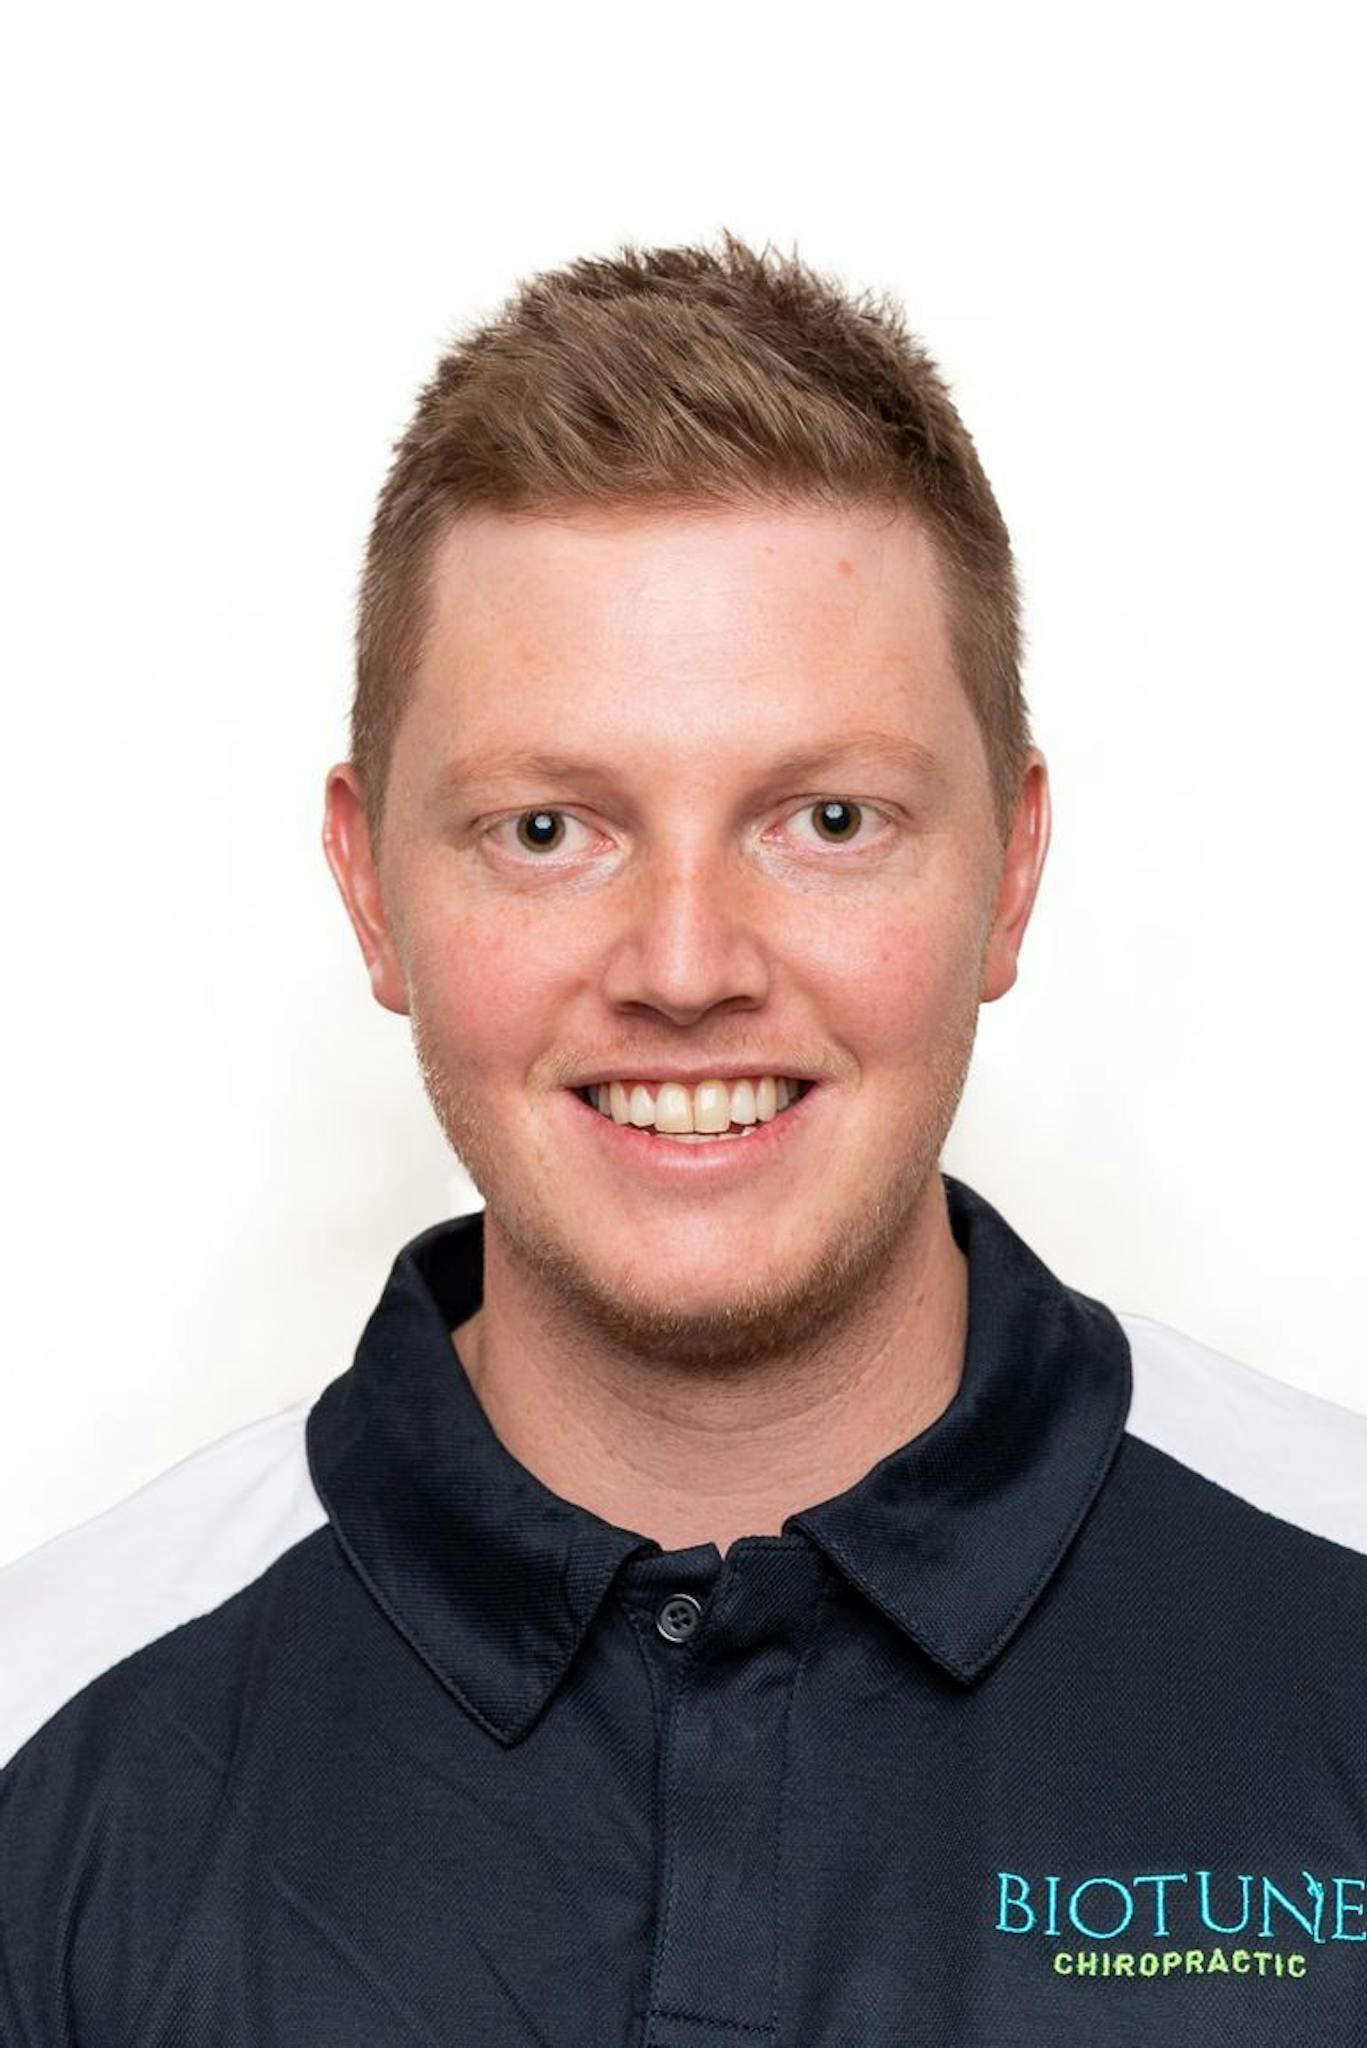 Practice staff profile photo of Matt Coxall